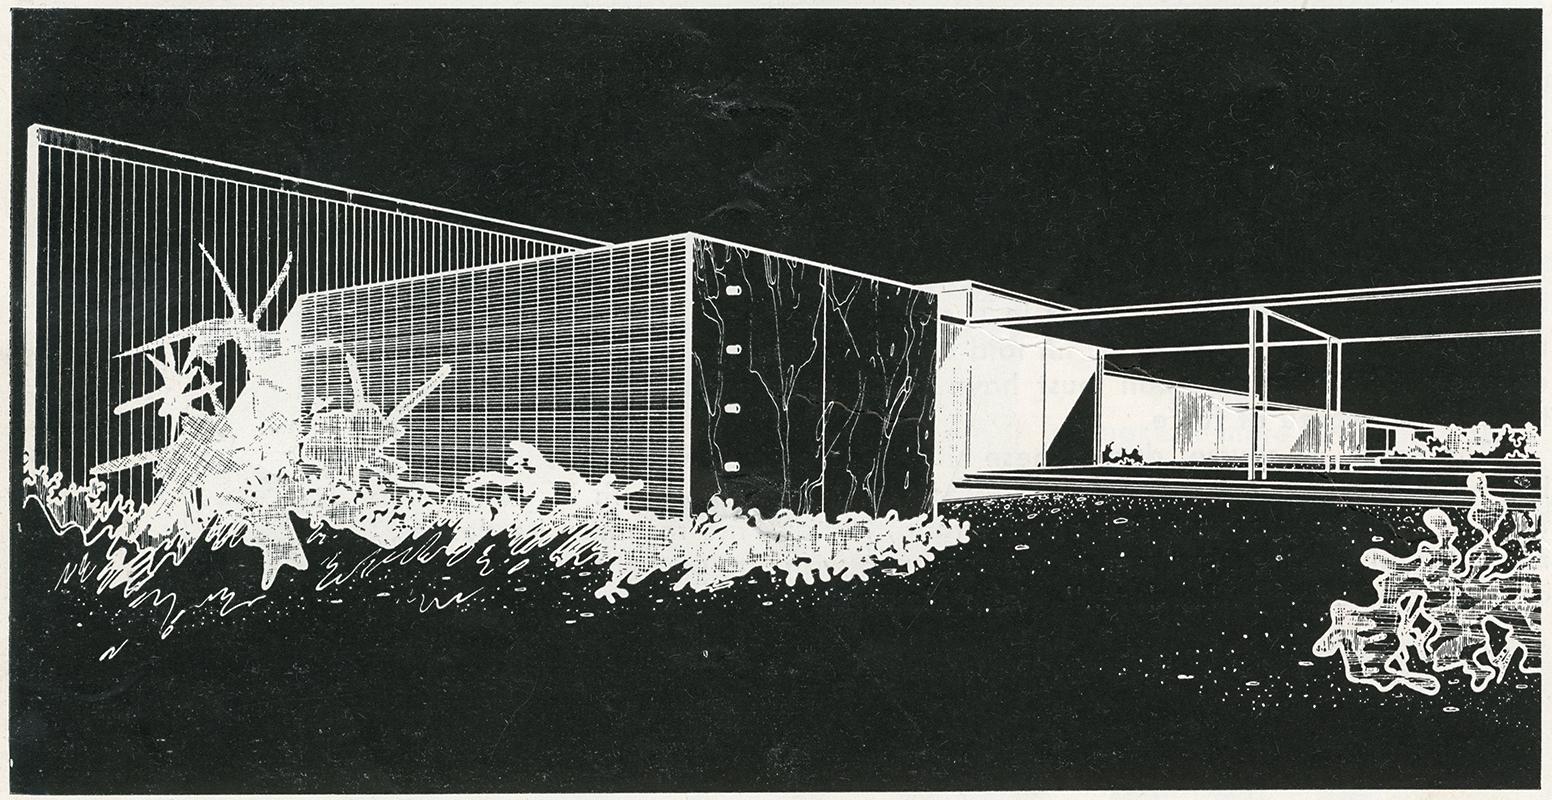 William F. Cody. Arts and Architecture. Sep 1952, 18